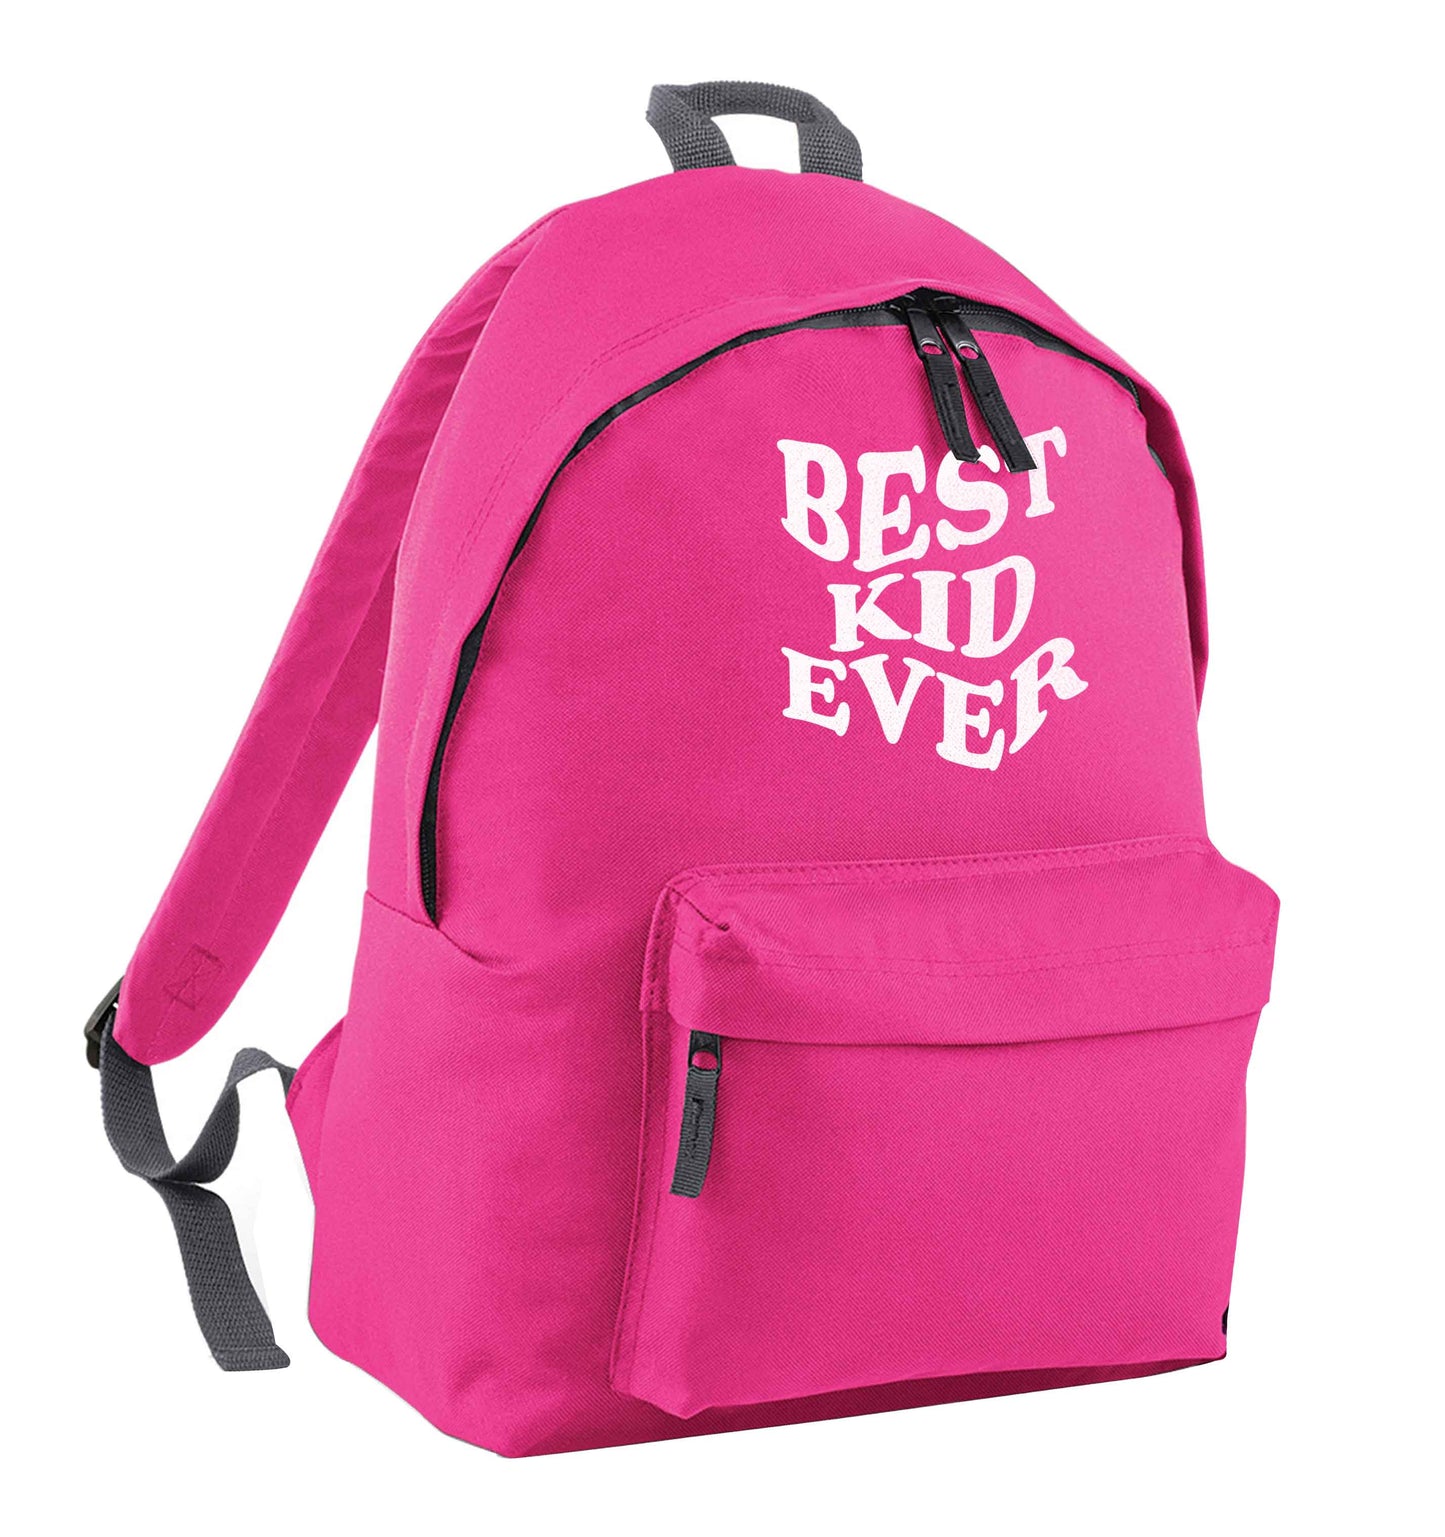 Best kid ever pink children's backpack